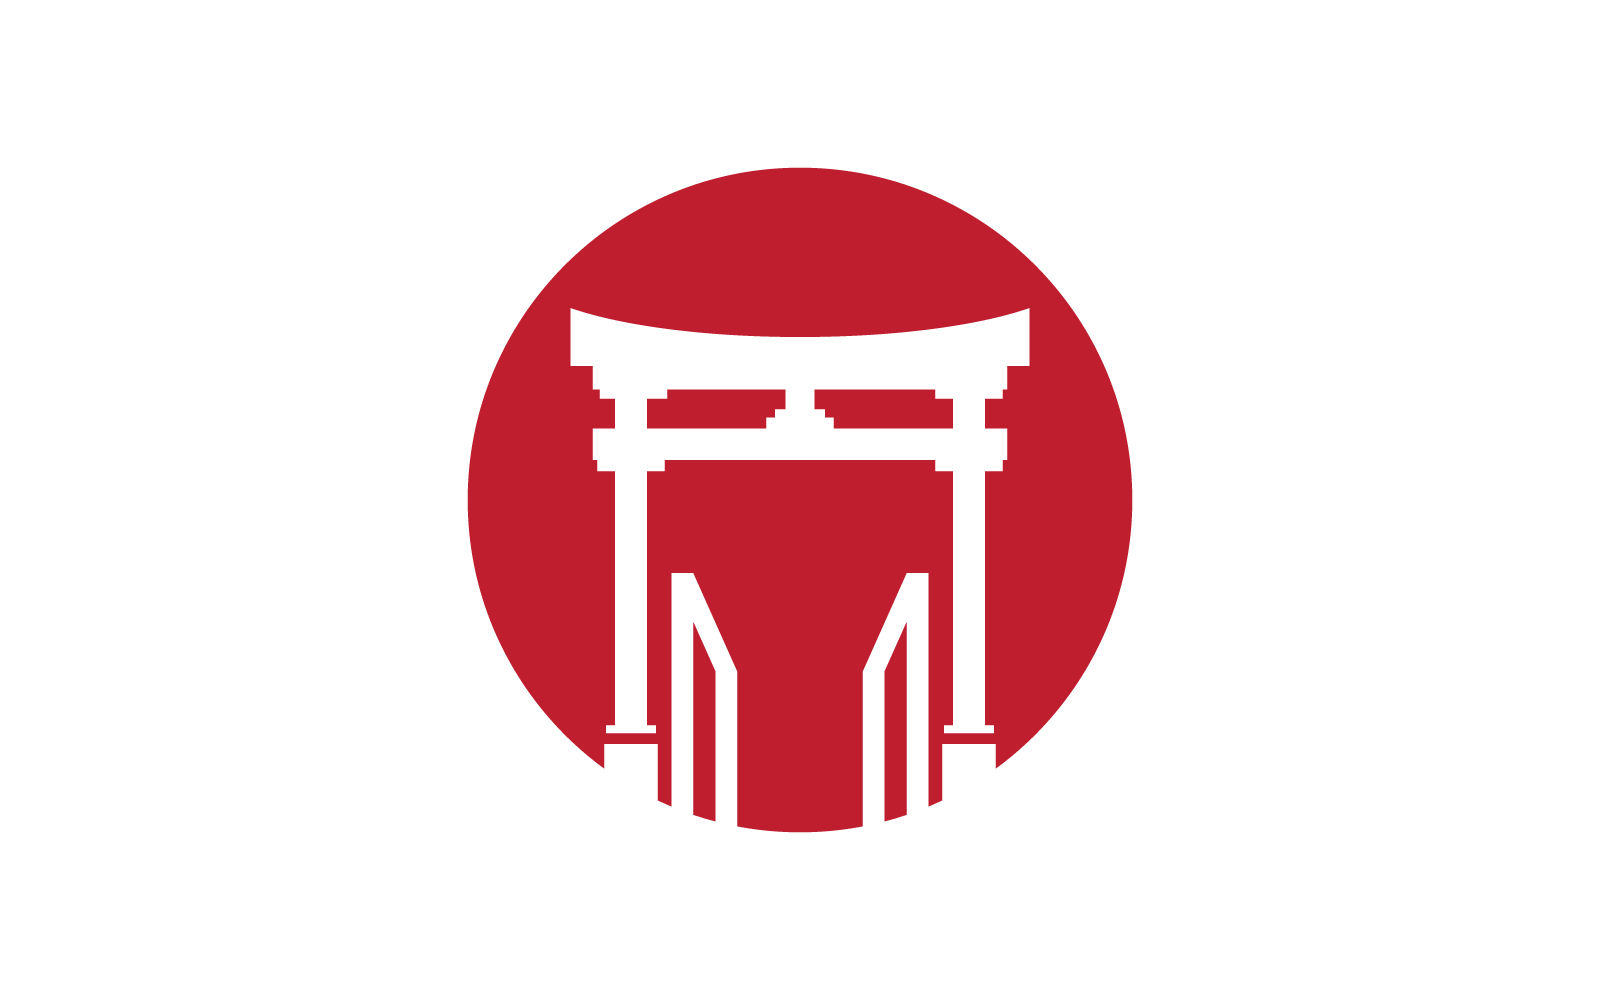 Torii gate illustration logo vector design template